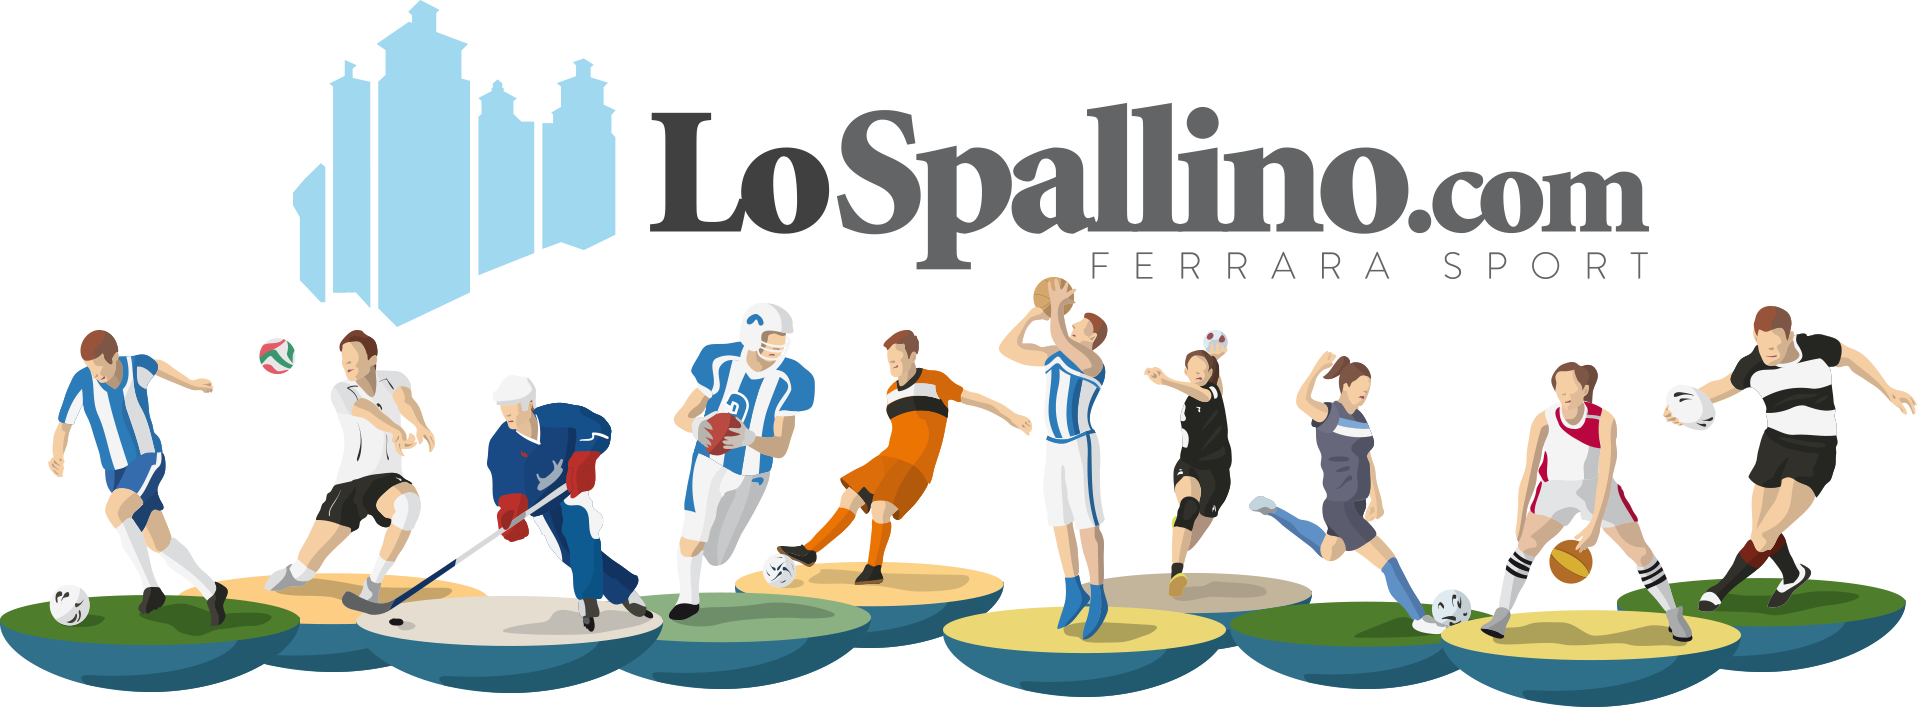 LoSpallino.com - Ferrara Sport Spal